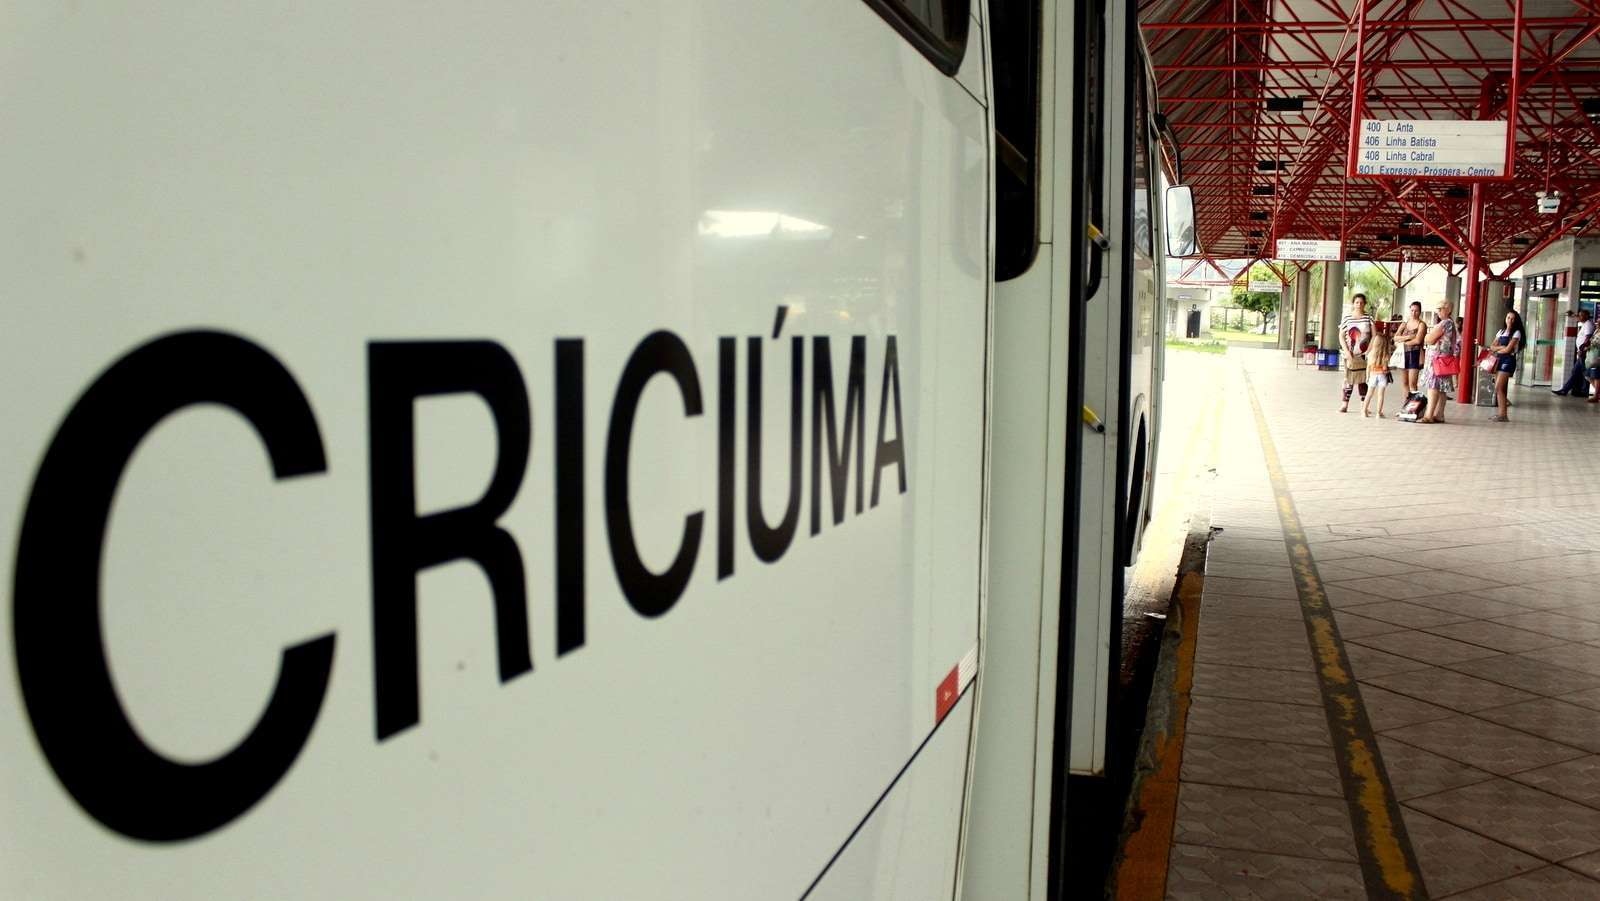 Transporte coletivo de Criciúma Foto de Jhulian Pereira